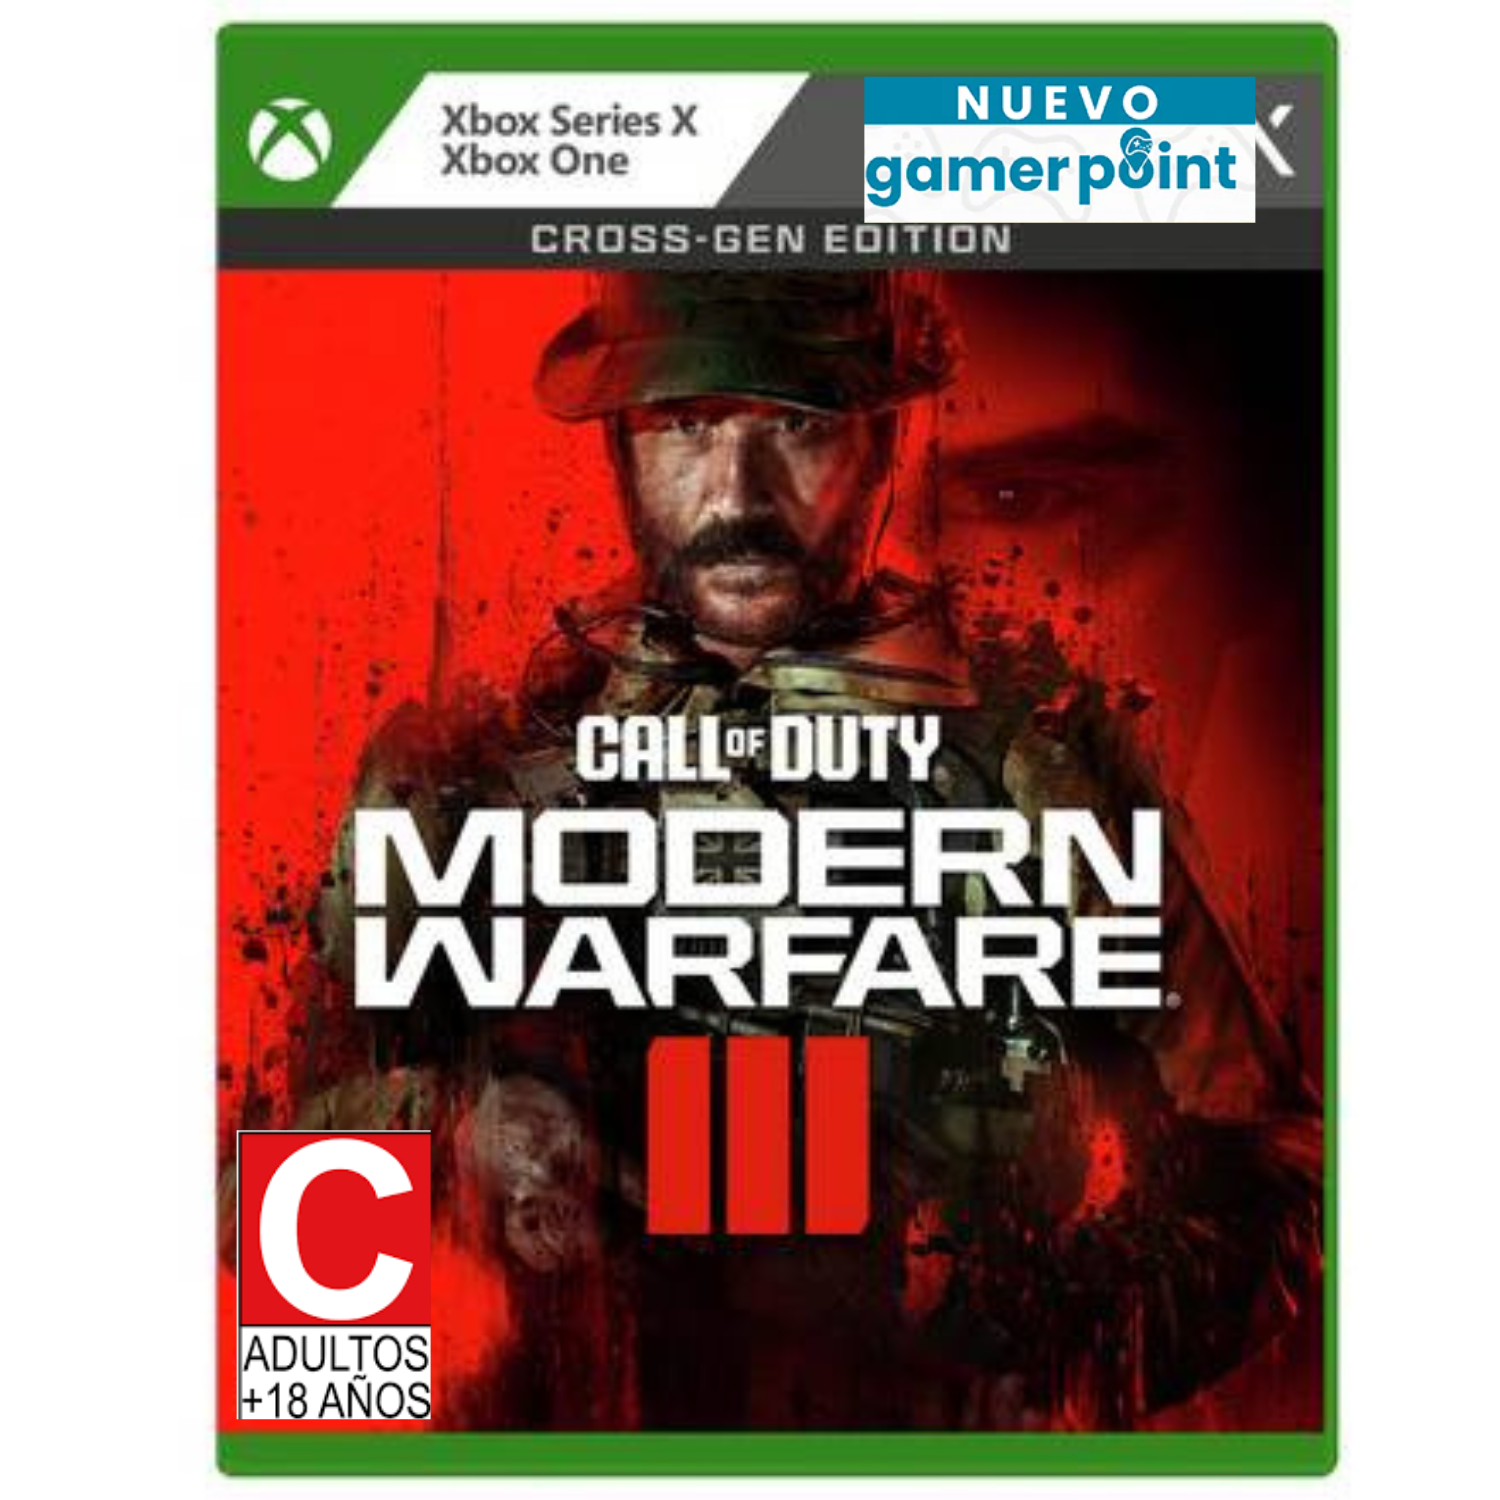 Call of Duty Modern Warfare lll (Americano) Xbox Series x/Xbox One